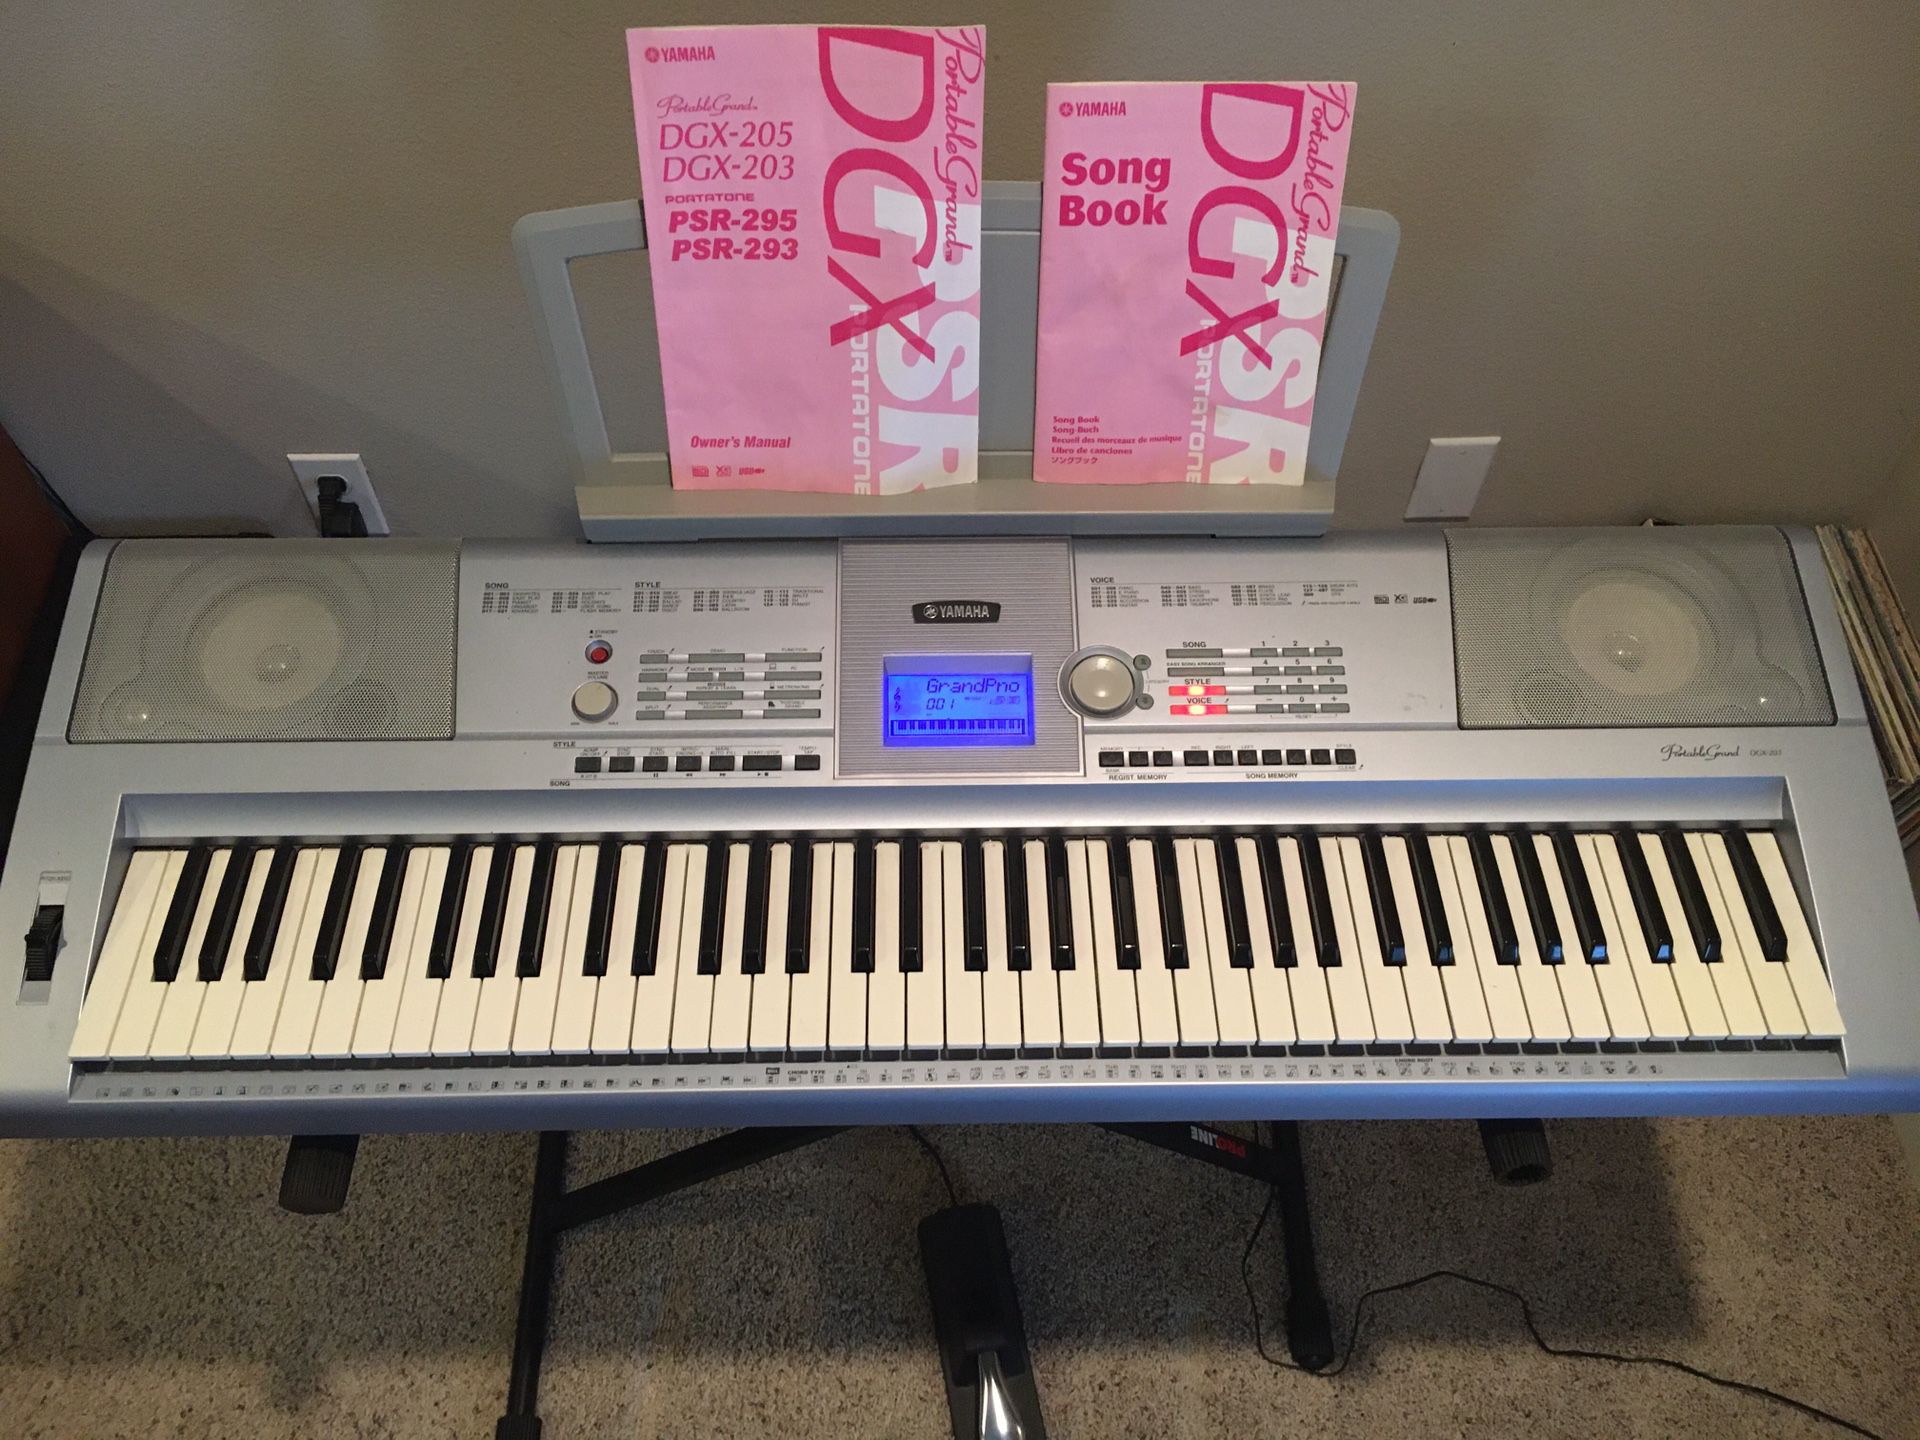 Yamaha DGX-203 keyboard